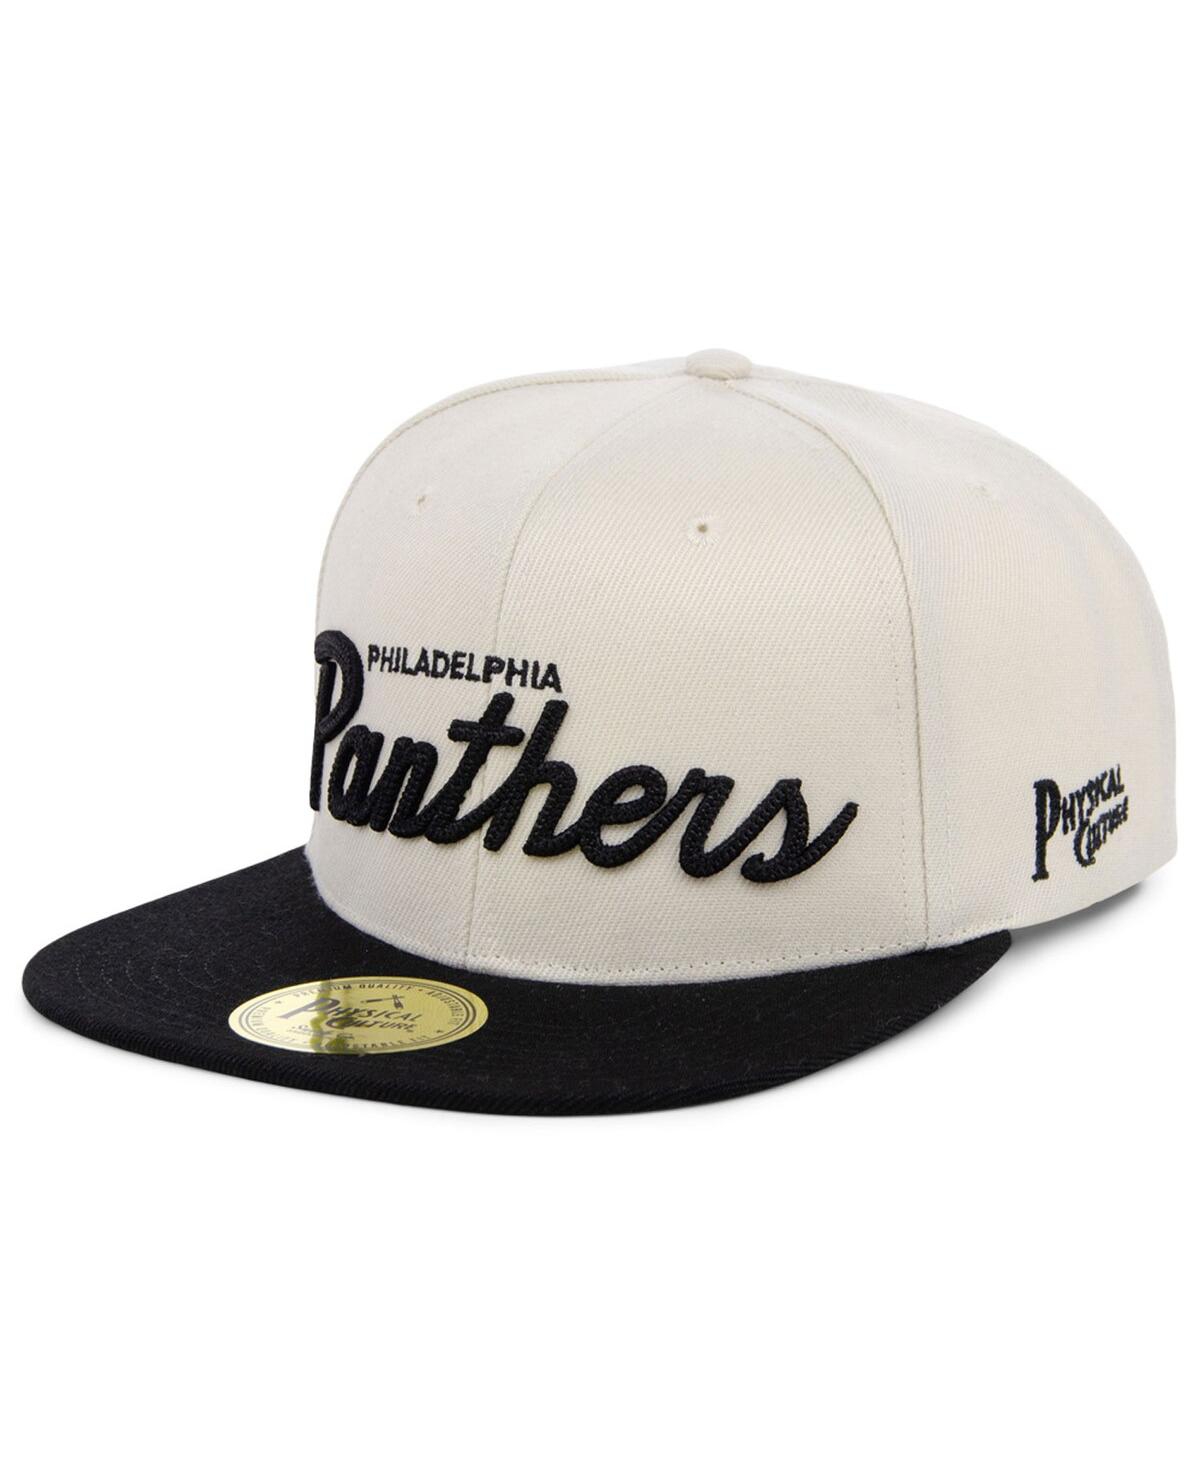 Men's Physical Culture Cream Philadelphia Panthers Black Fives Snapback Adjustable Hat - Cream